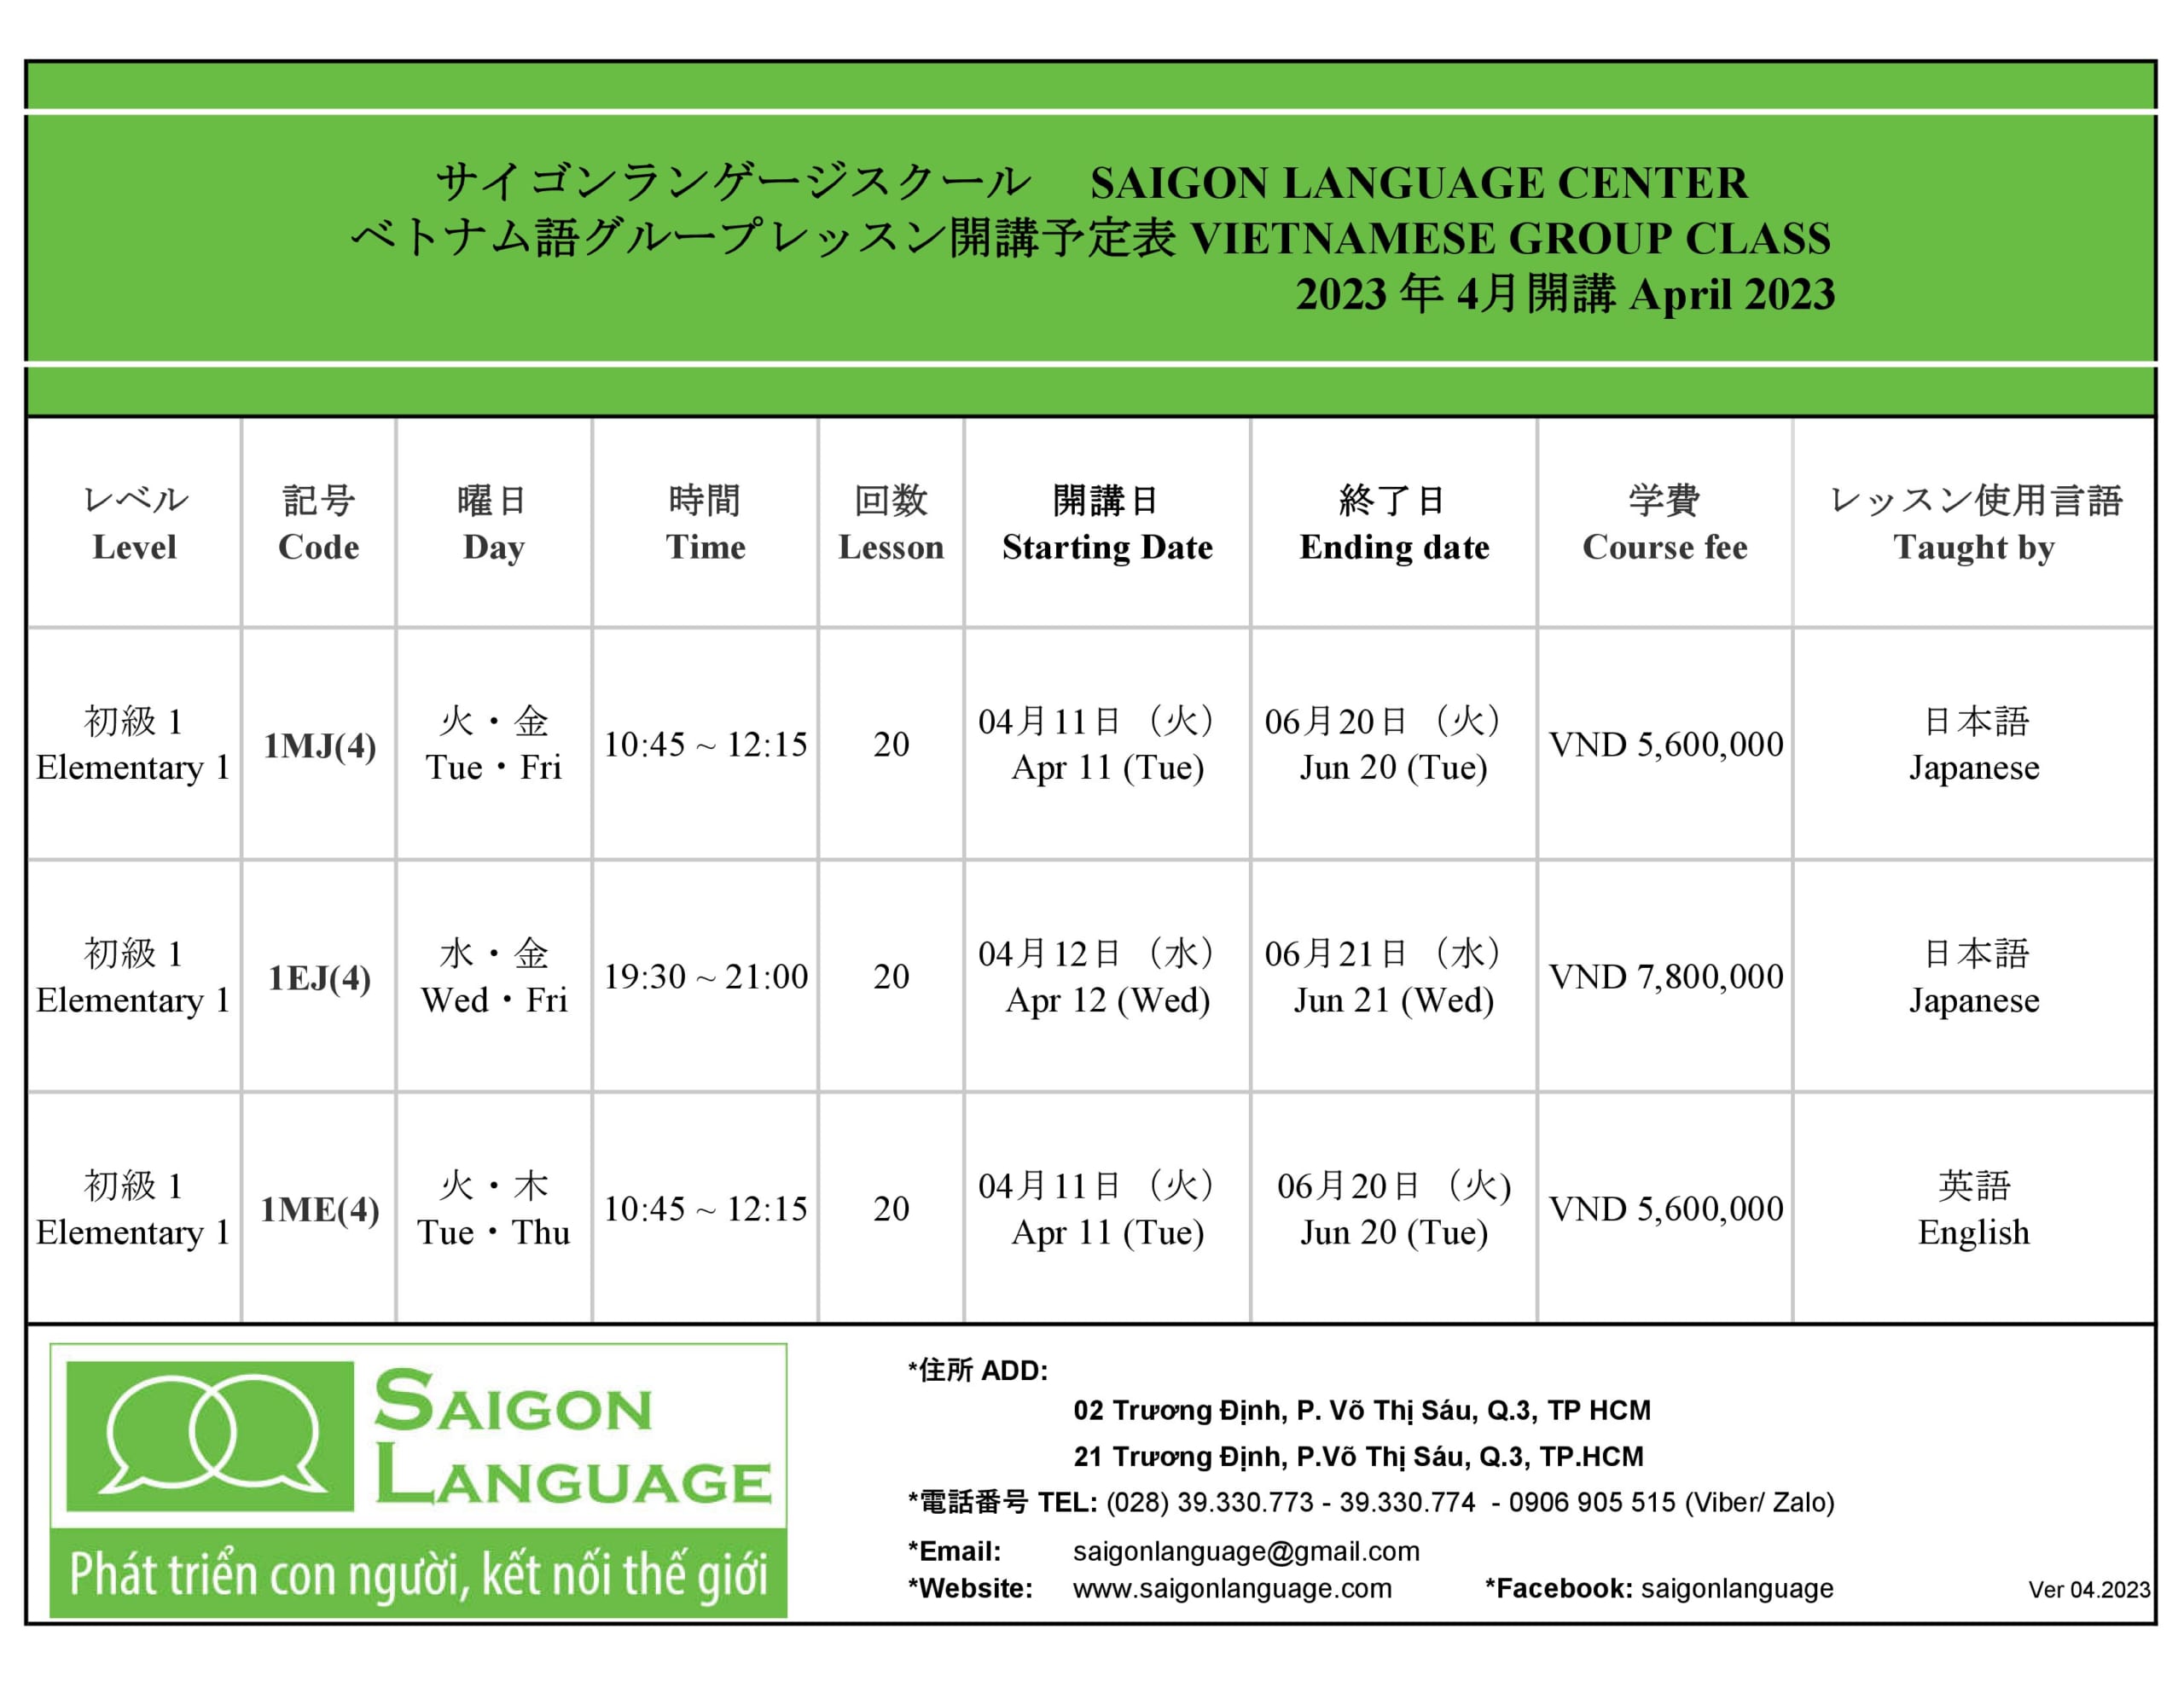 Vietnamese group lesson (beginner class), starting April 2023!